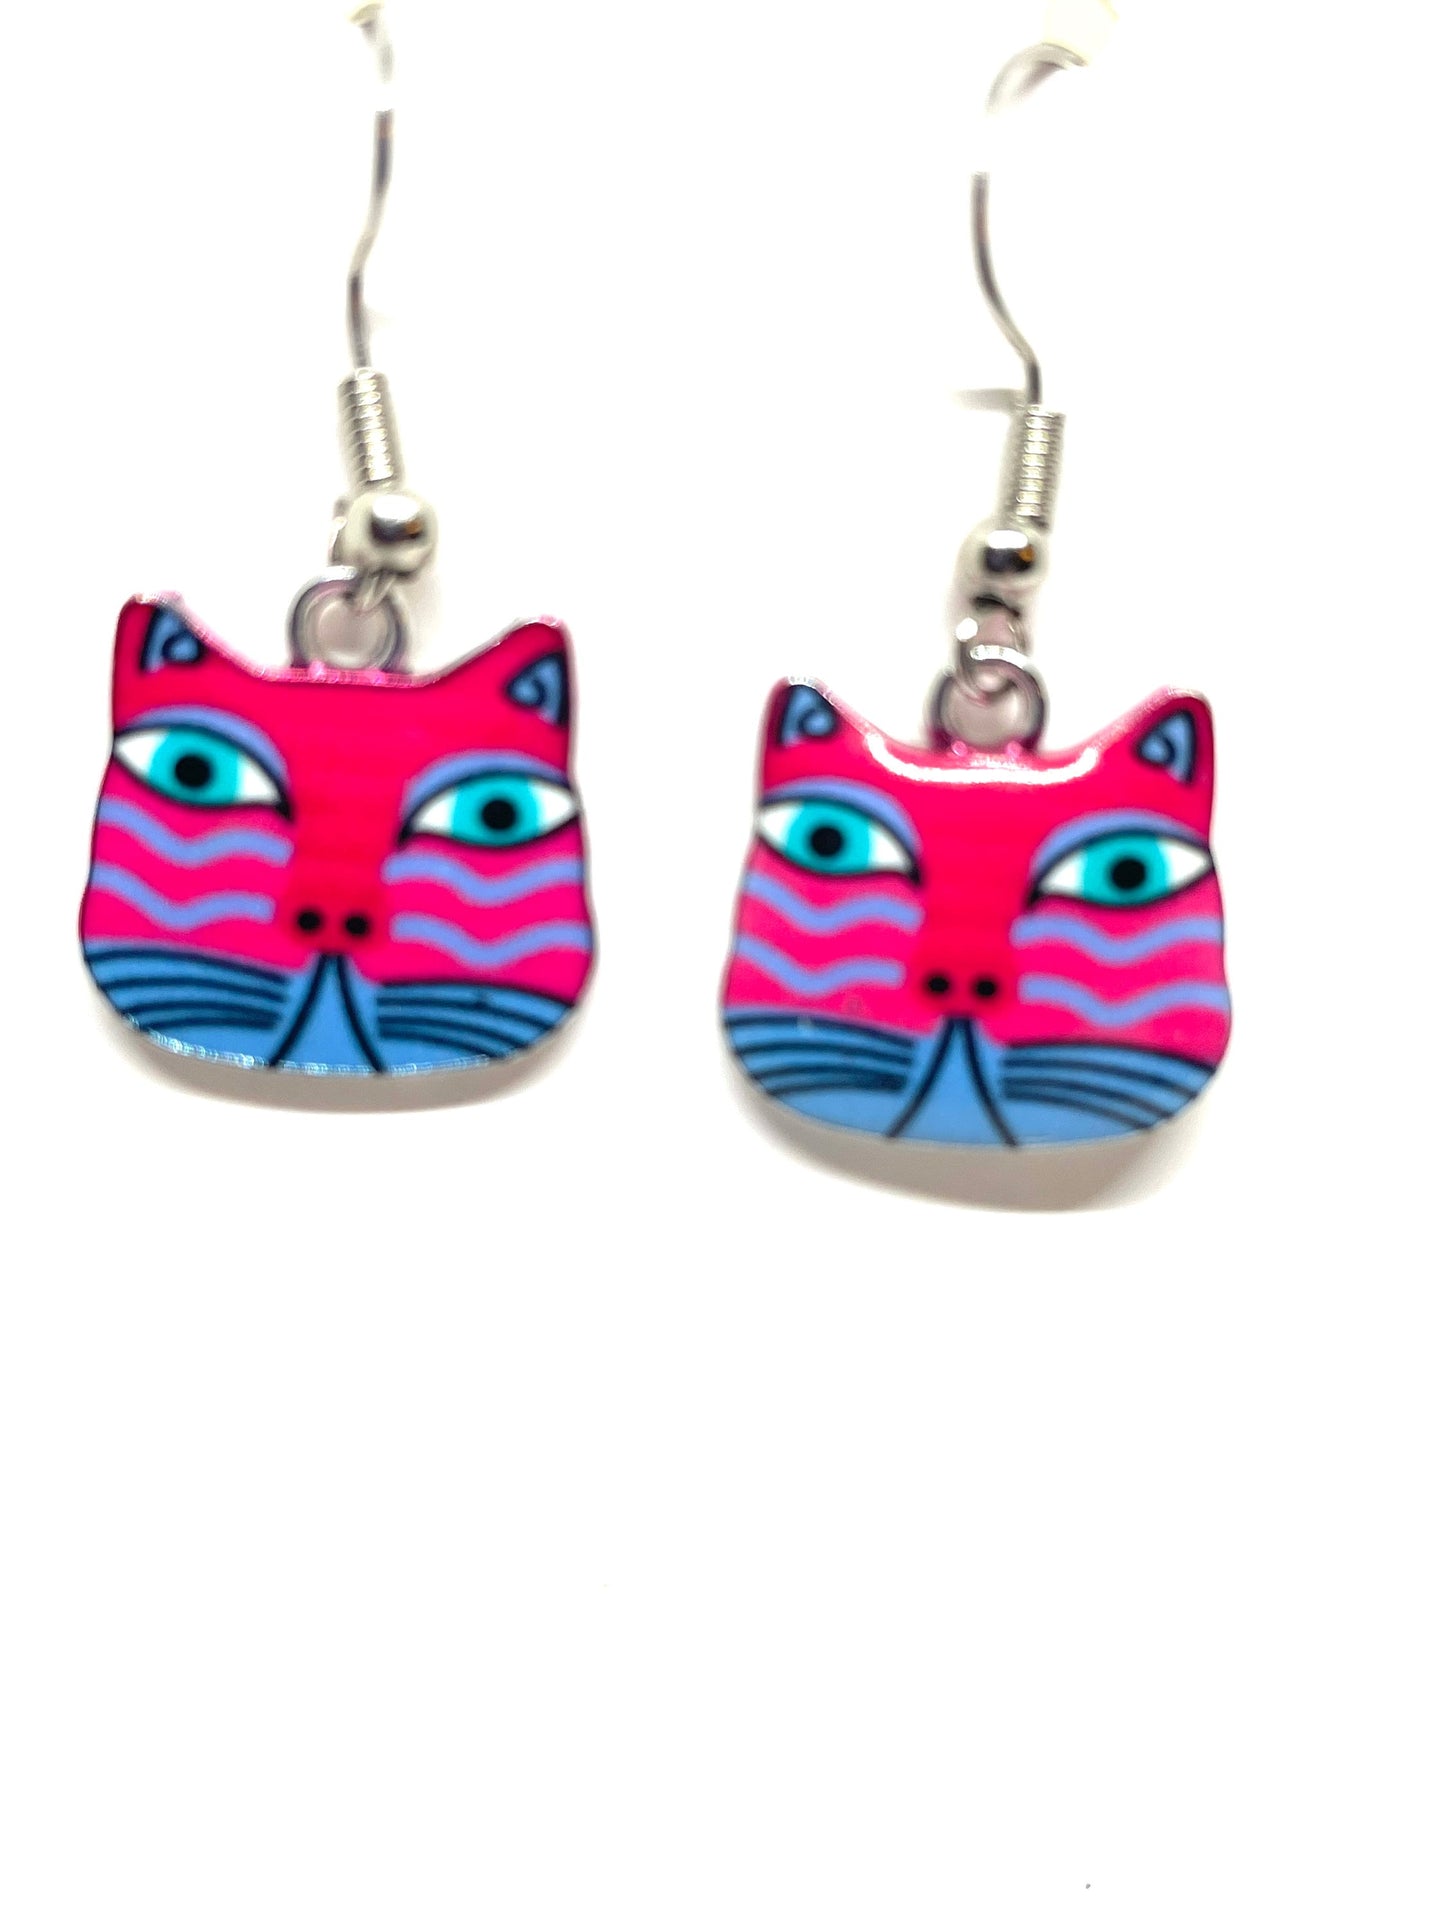 Abstract Cat Earrings, Colorful Cat Earrings, Unique Cat Earrings, Feline Earrings, Kitty Earrings, Dangle Earrings, My Katz Designs